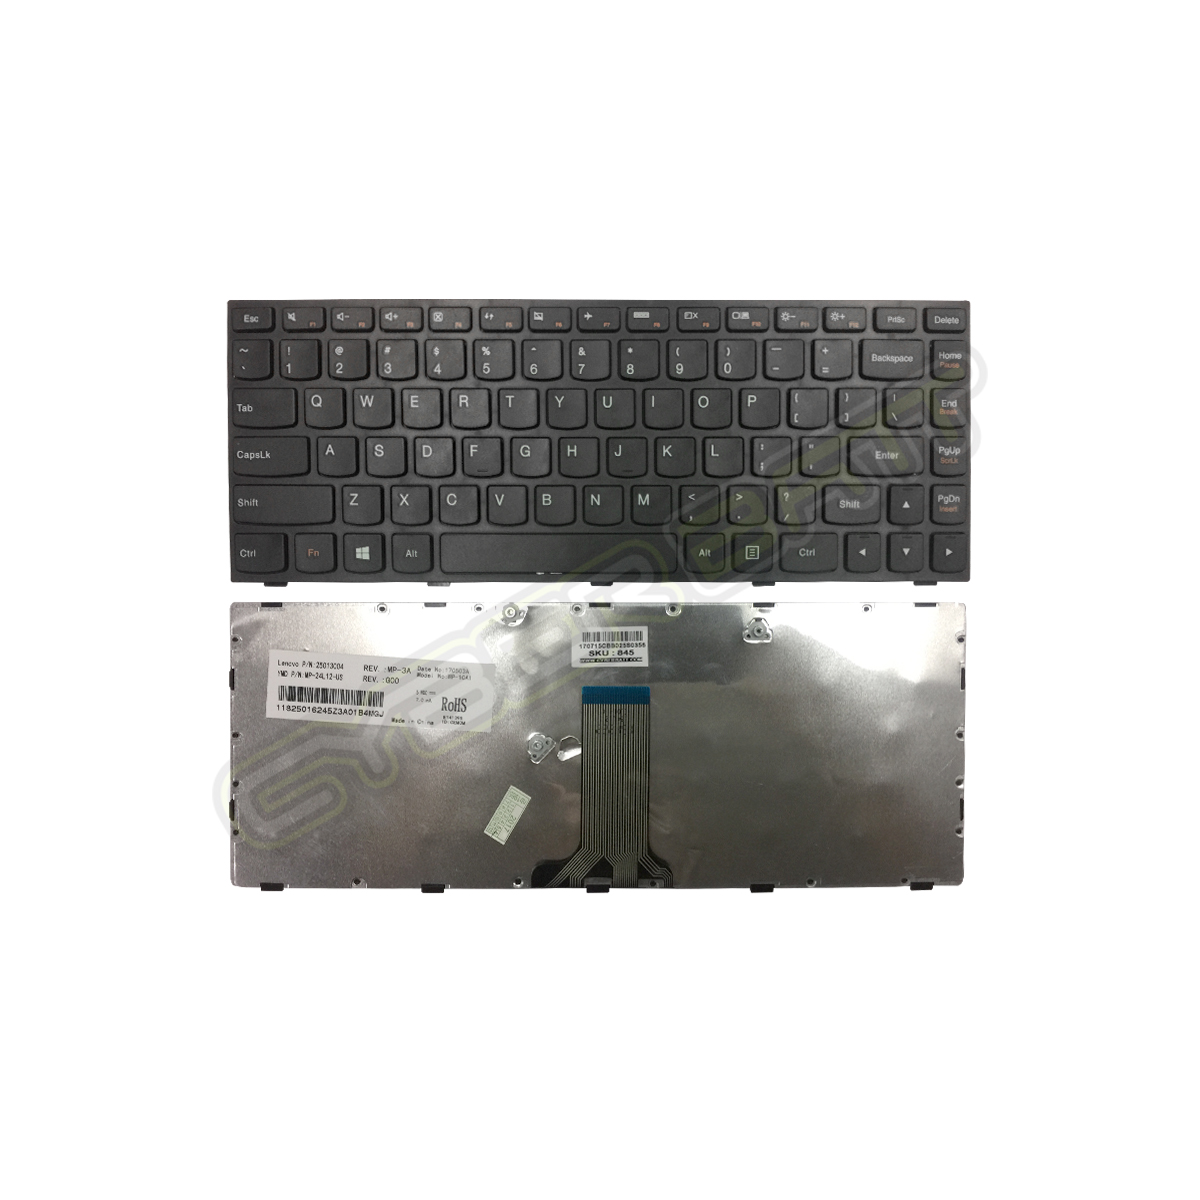 Keyboard Lenovo G40-70 Black US 